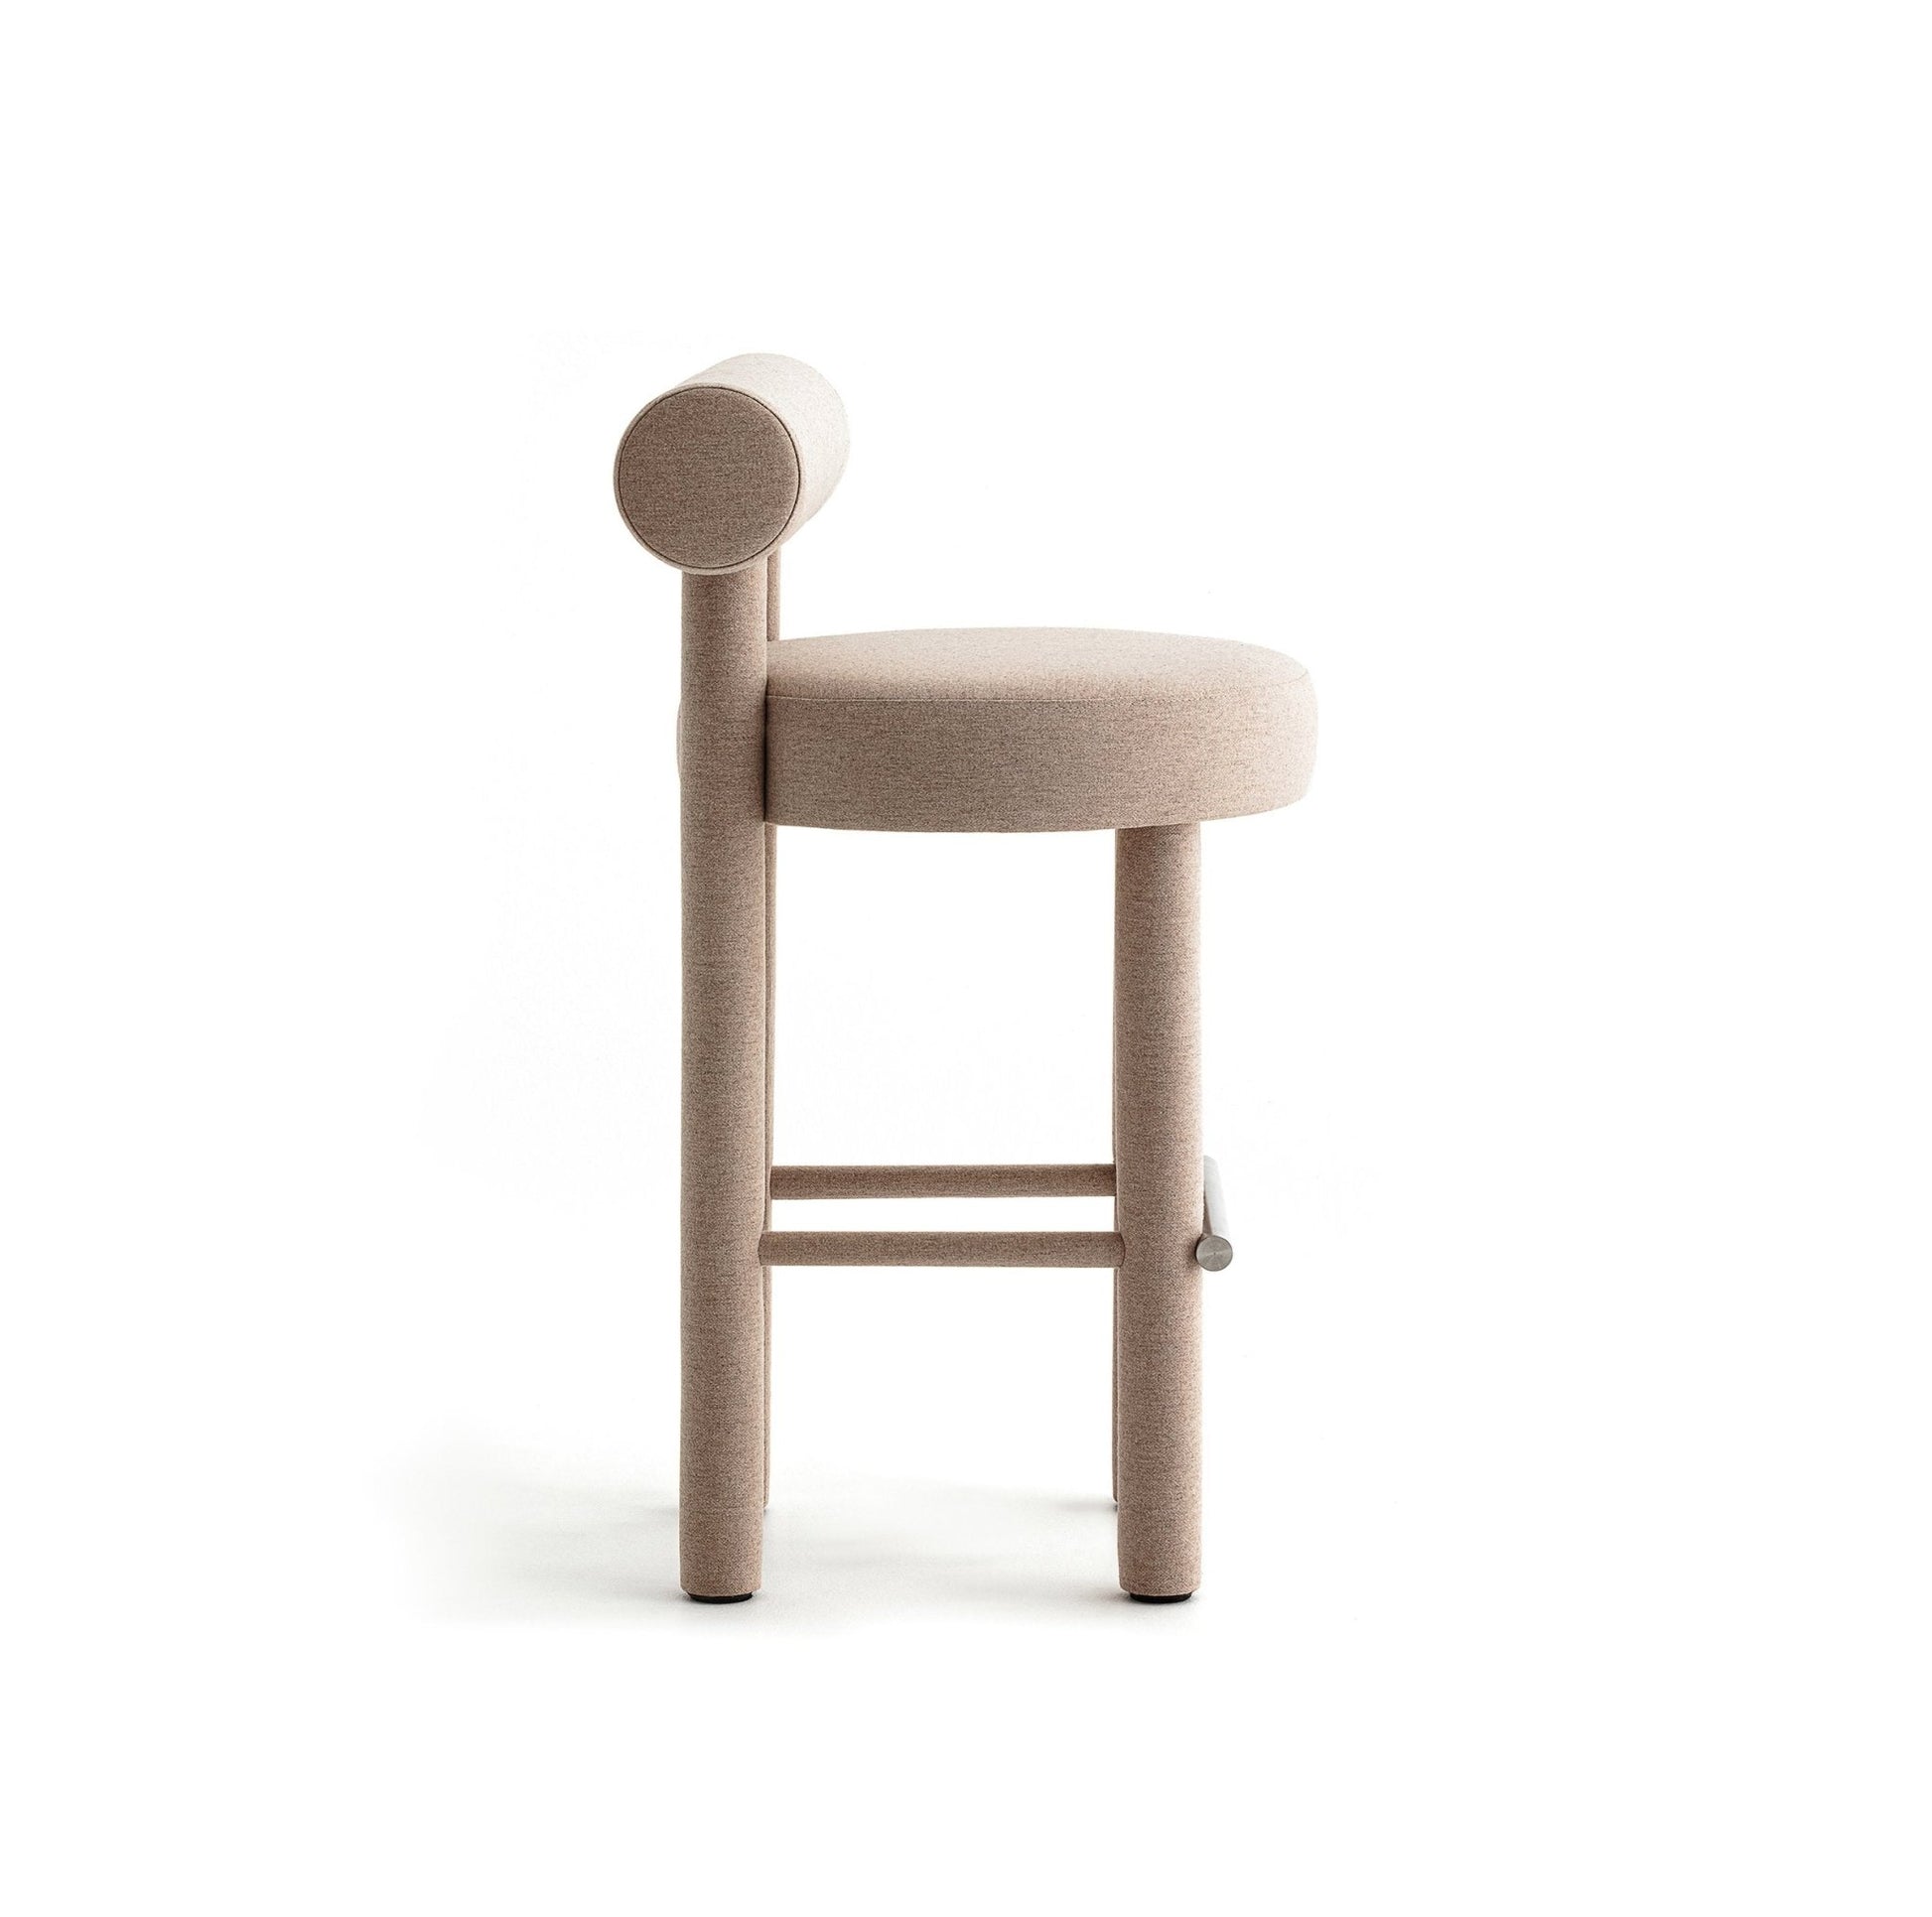 Bar Chair with backrest GROPIUS CS1 - UKRAINIAN PRODUCT DESIGN